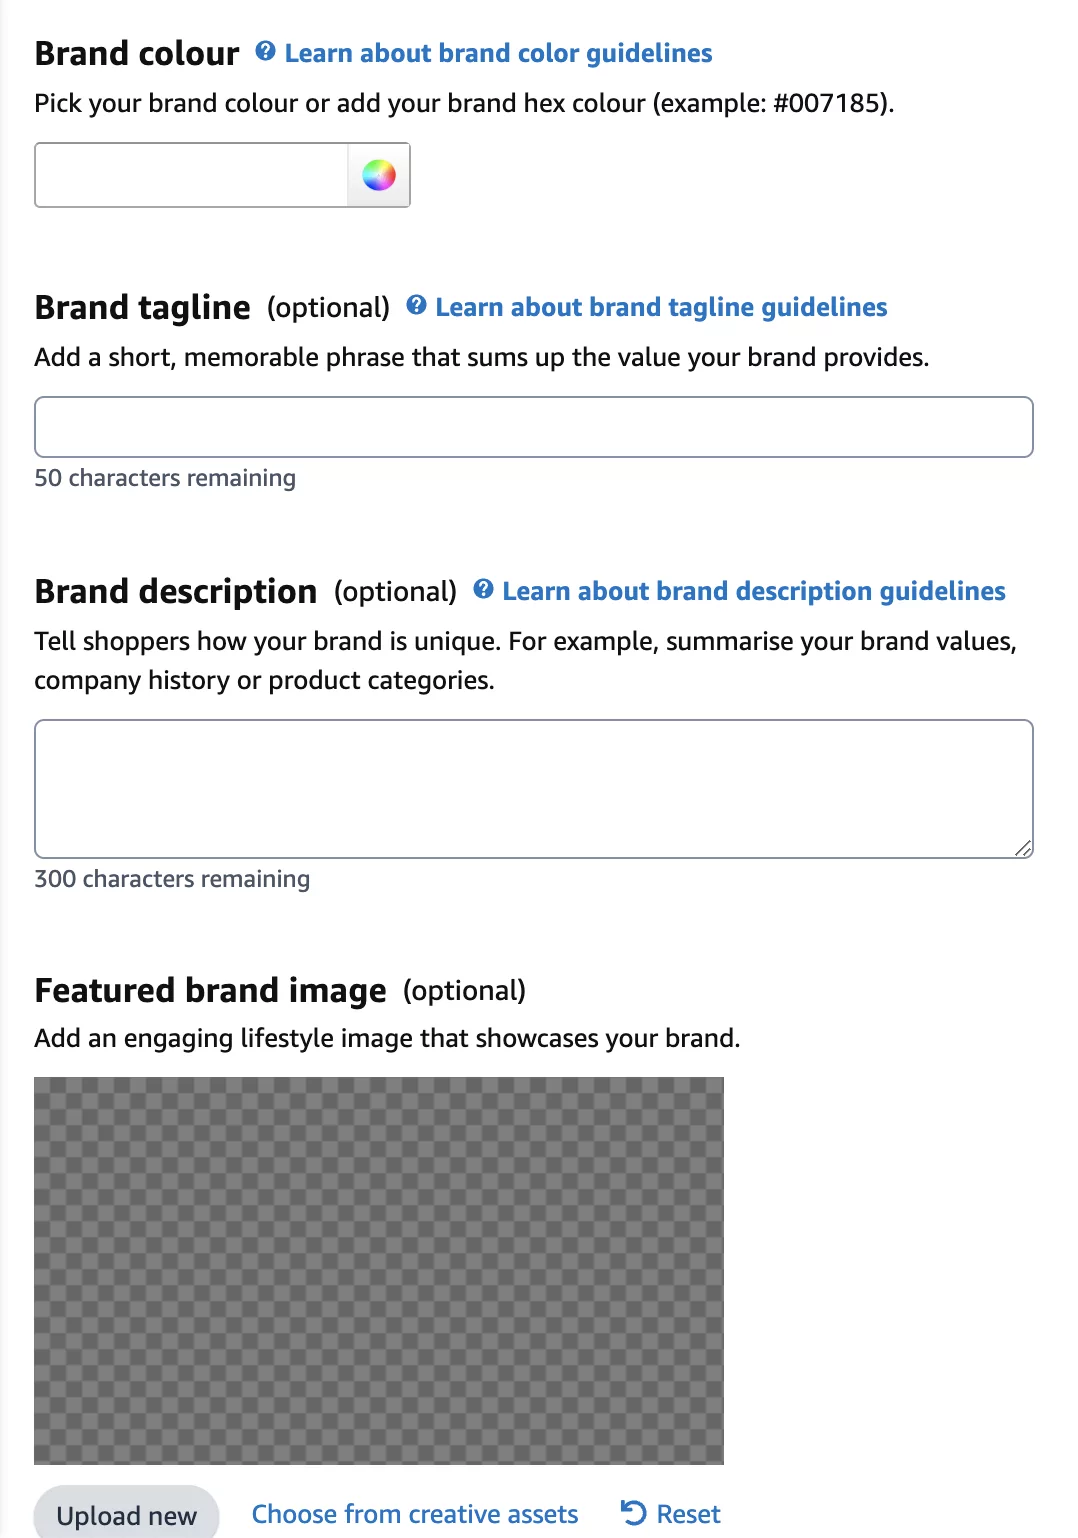 brand-profile-layout-of-application-amazon